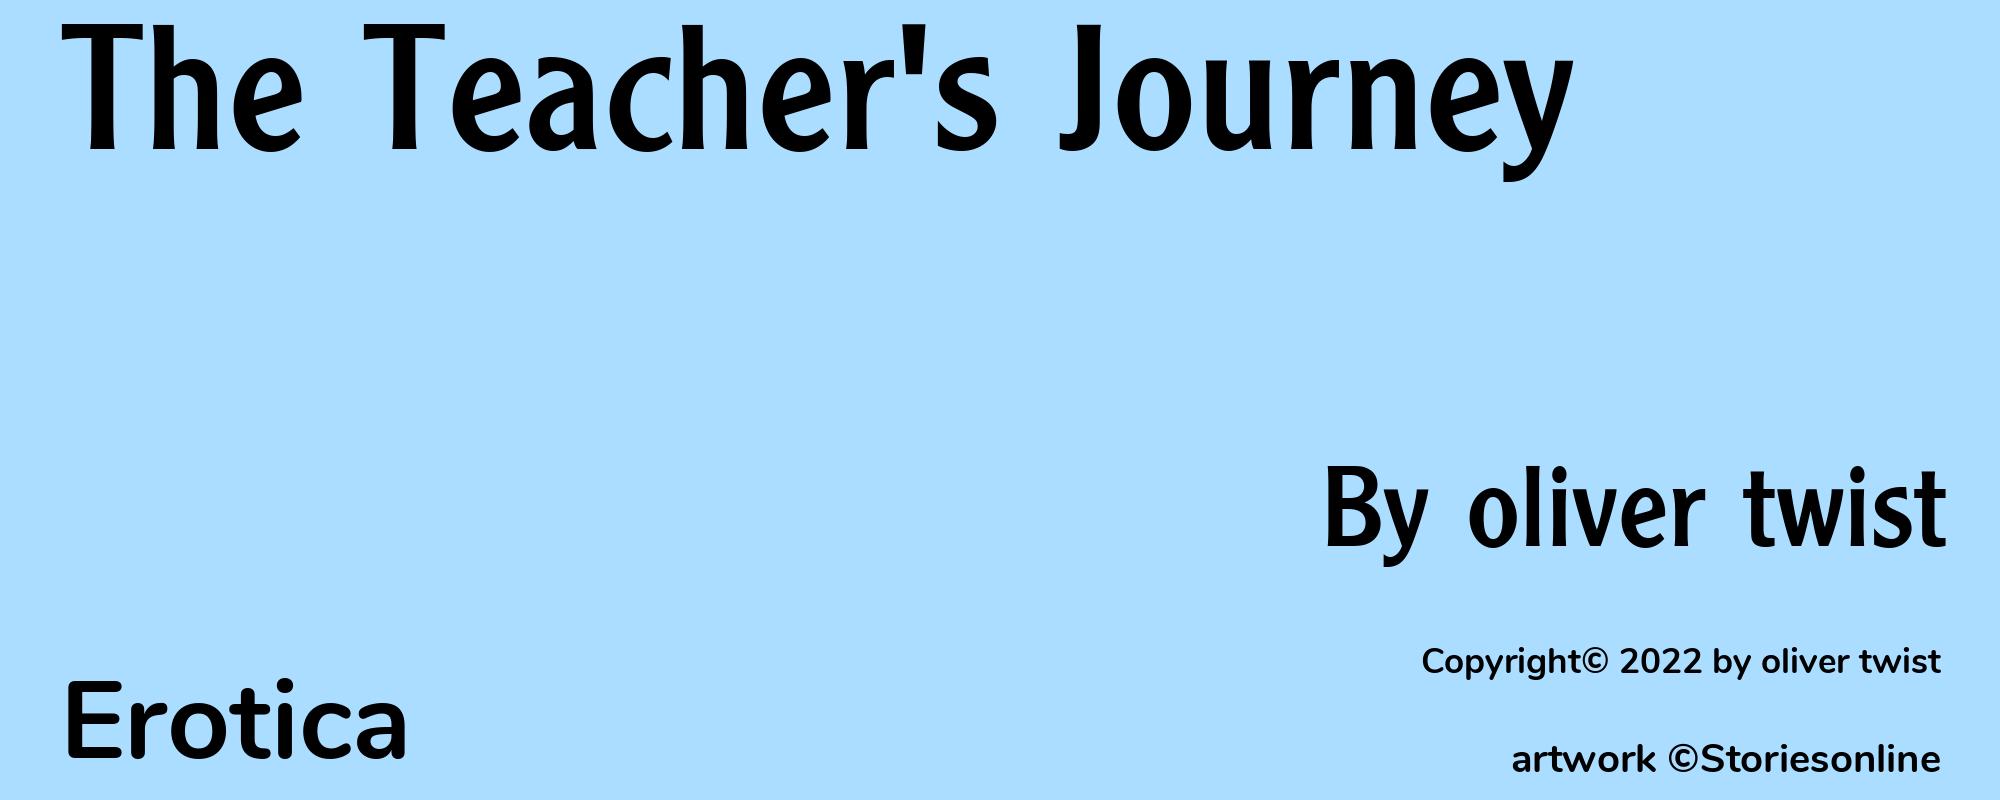 The Teacher's Journey - Cover